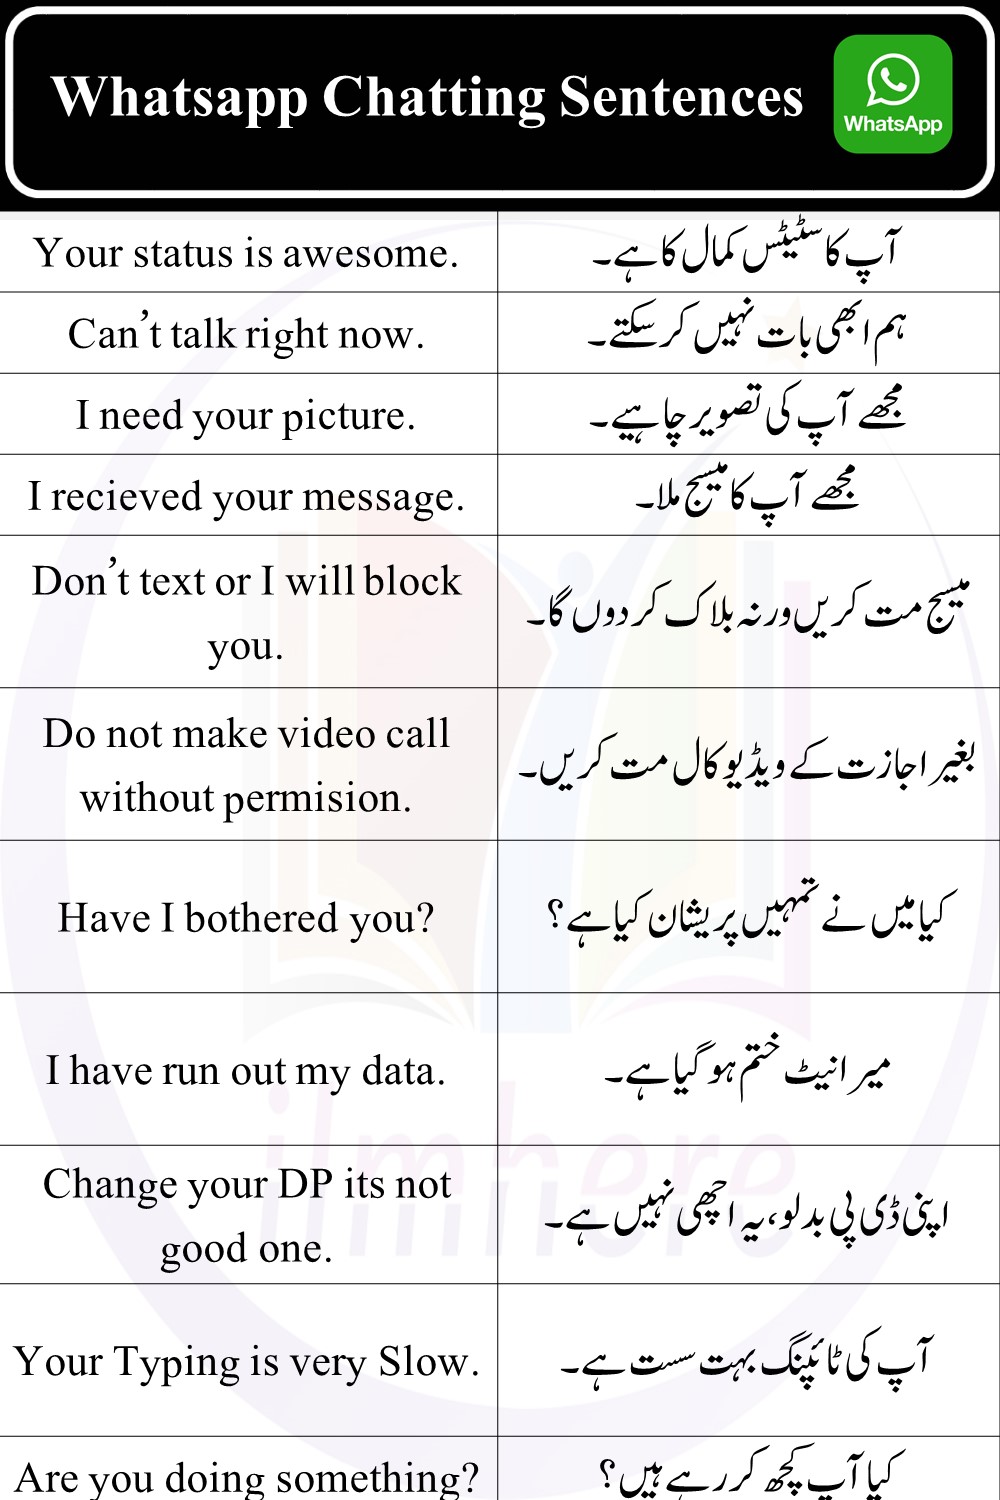 47 WhatsApp Chatting Sentences In English With Urdu Translation